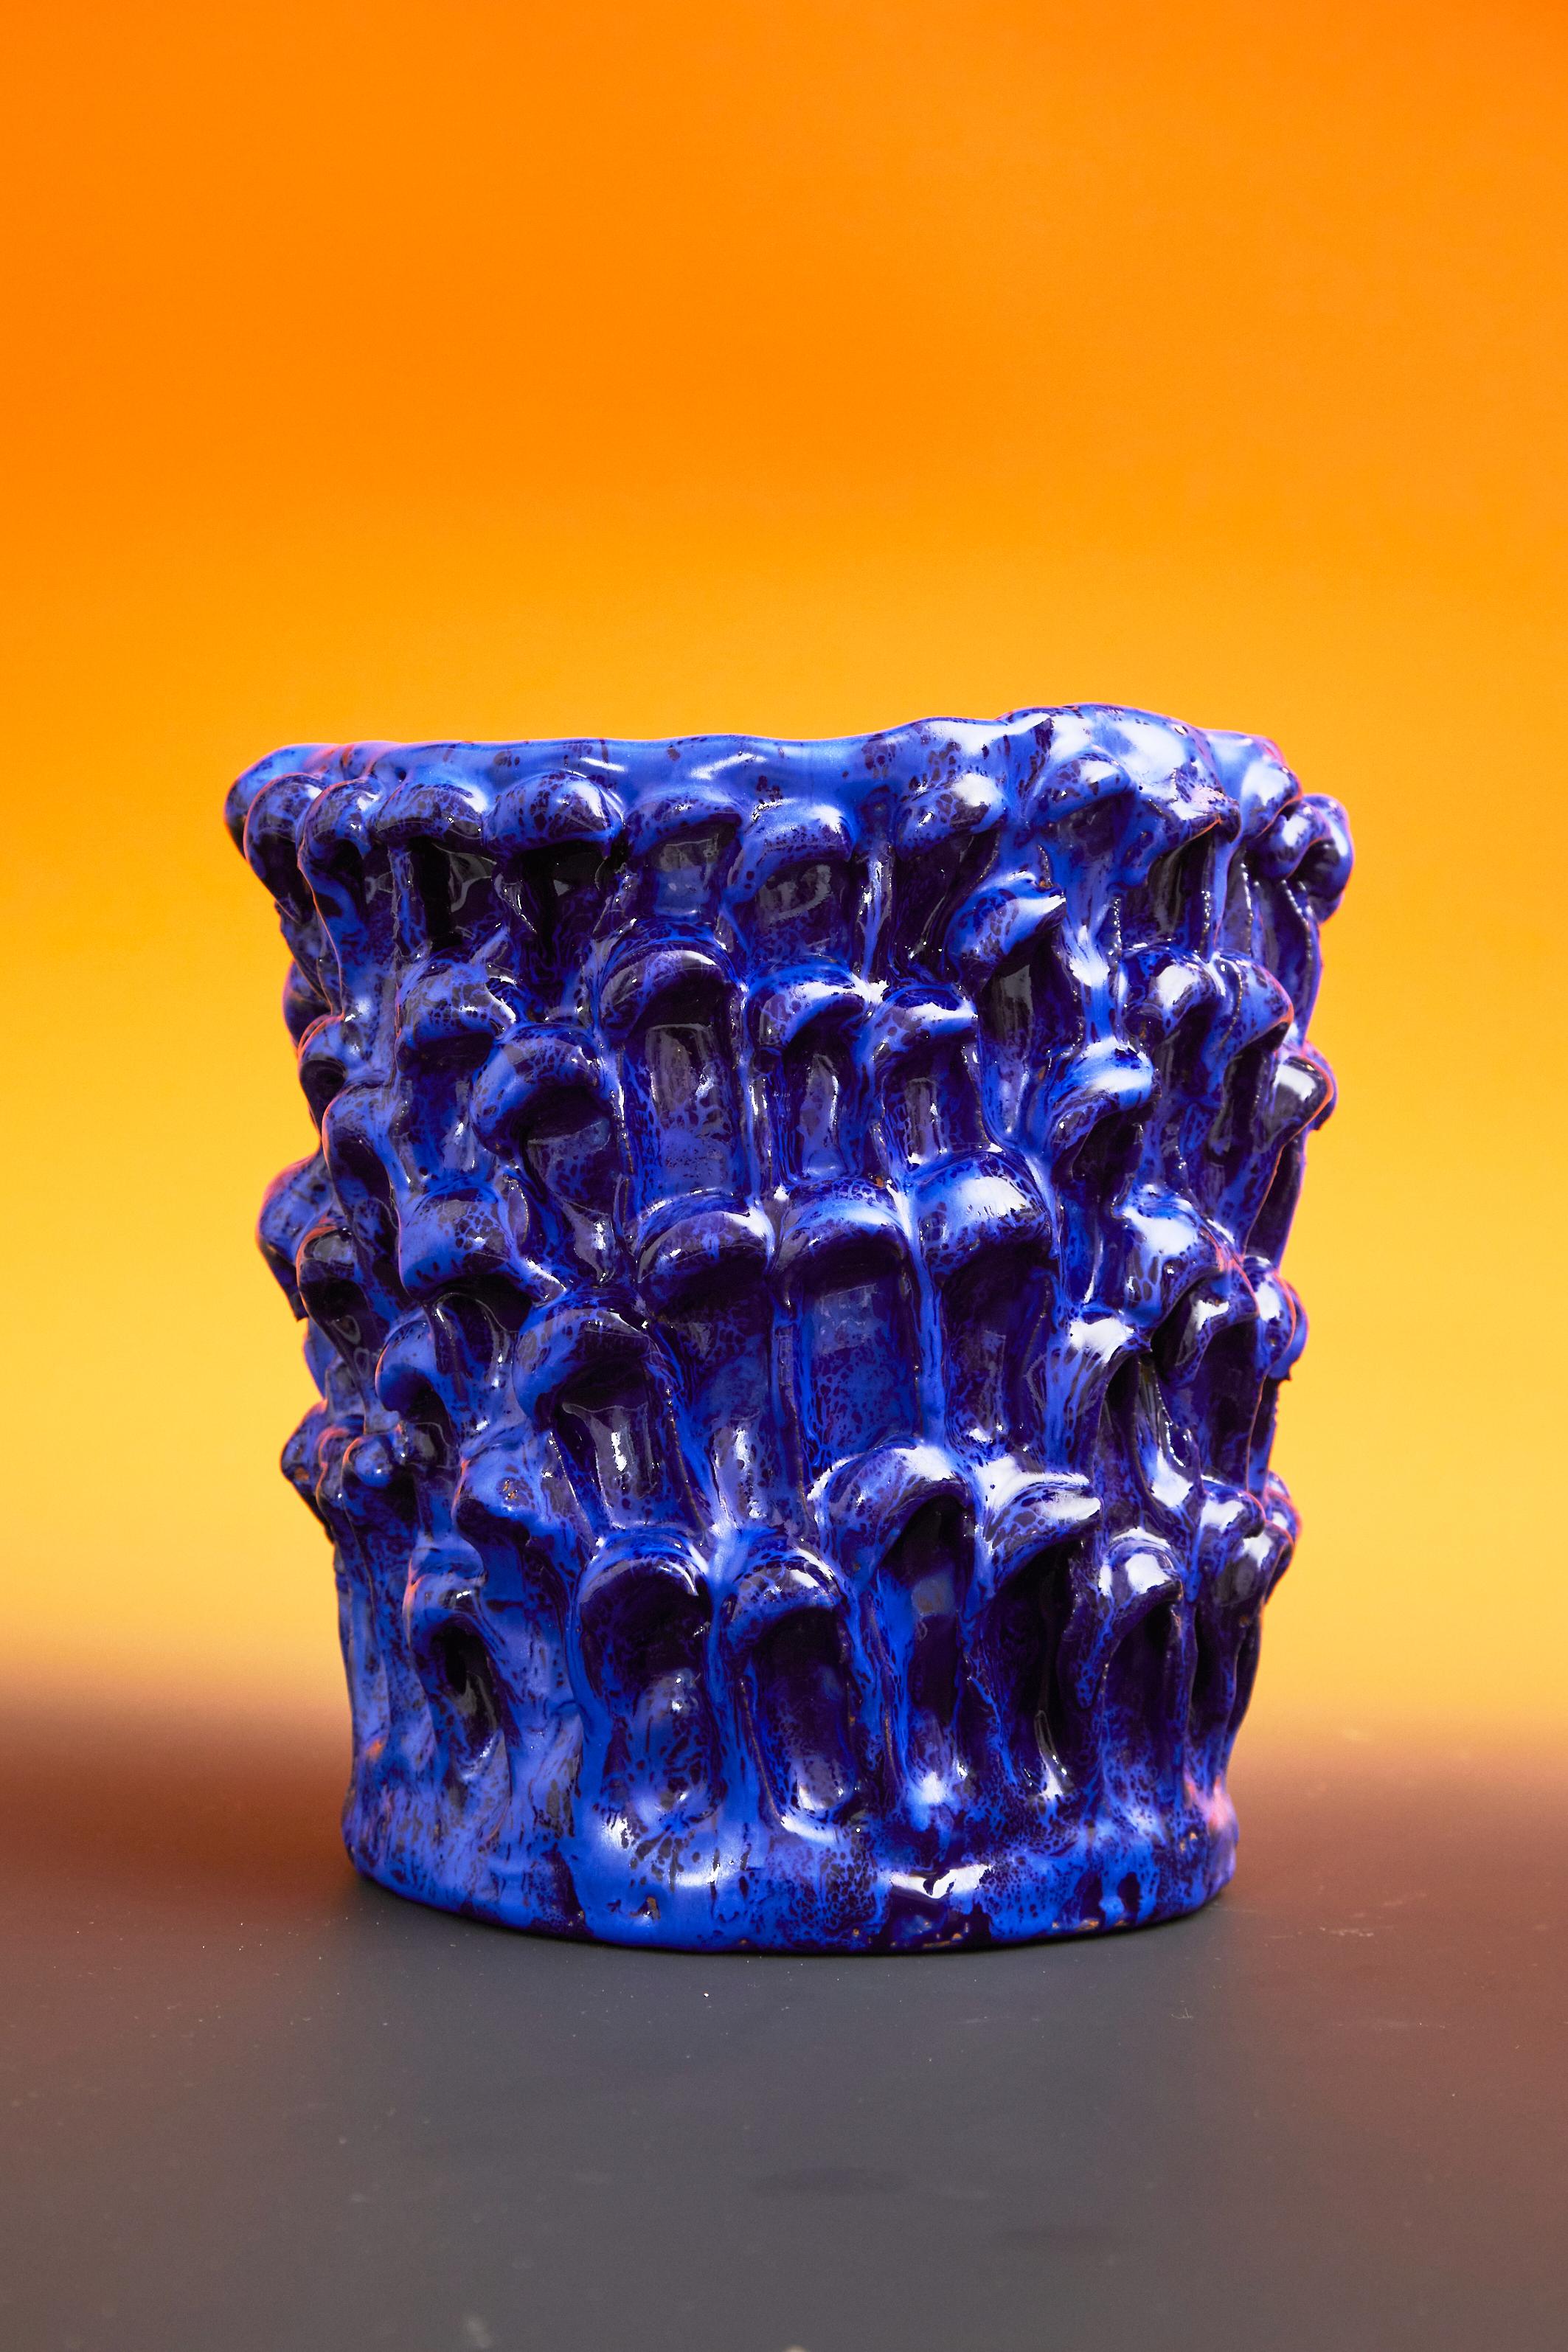 Onda Vase in Egyptian and Izmir Blue 01/20 numbered serie
Unique Handmade Piece
Glazed earthenware by Daria Dazzan
Earthenware, glazes
18 X 20 cm ab.

Handmade earthenware vase by Daria Dazzan, unique piece, numbered.
Daria Dazzan develops her